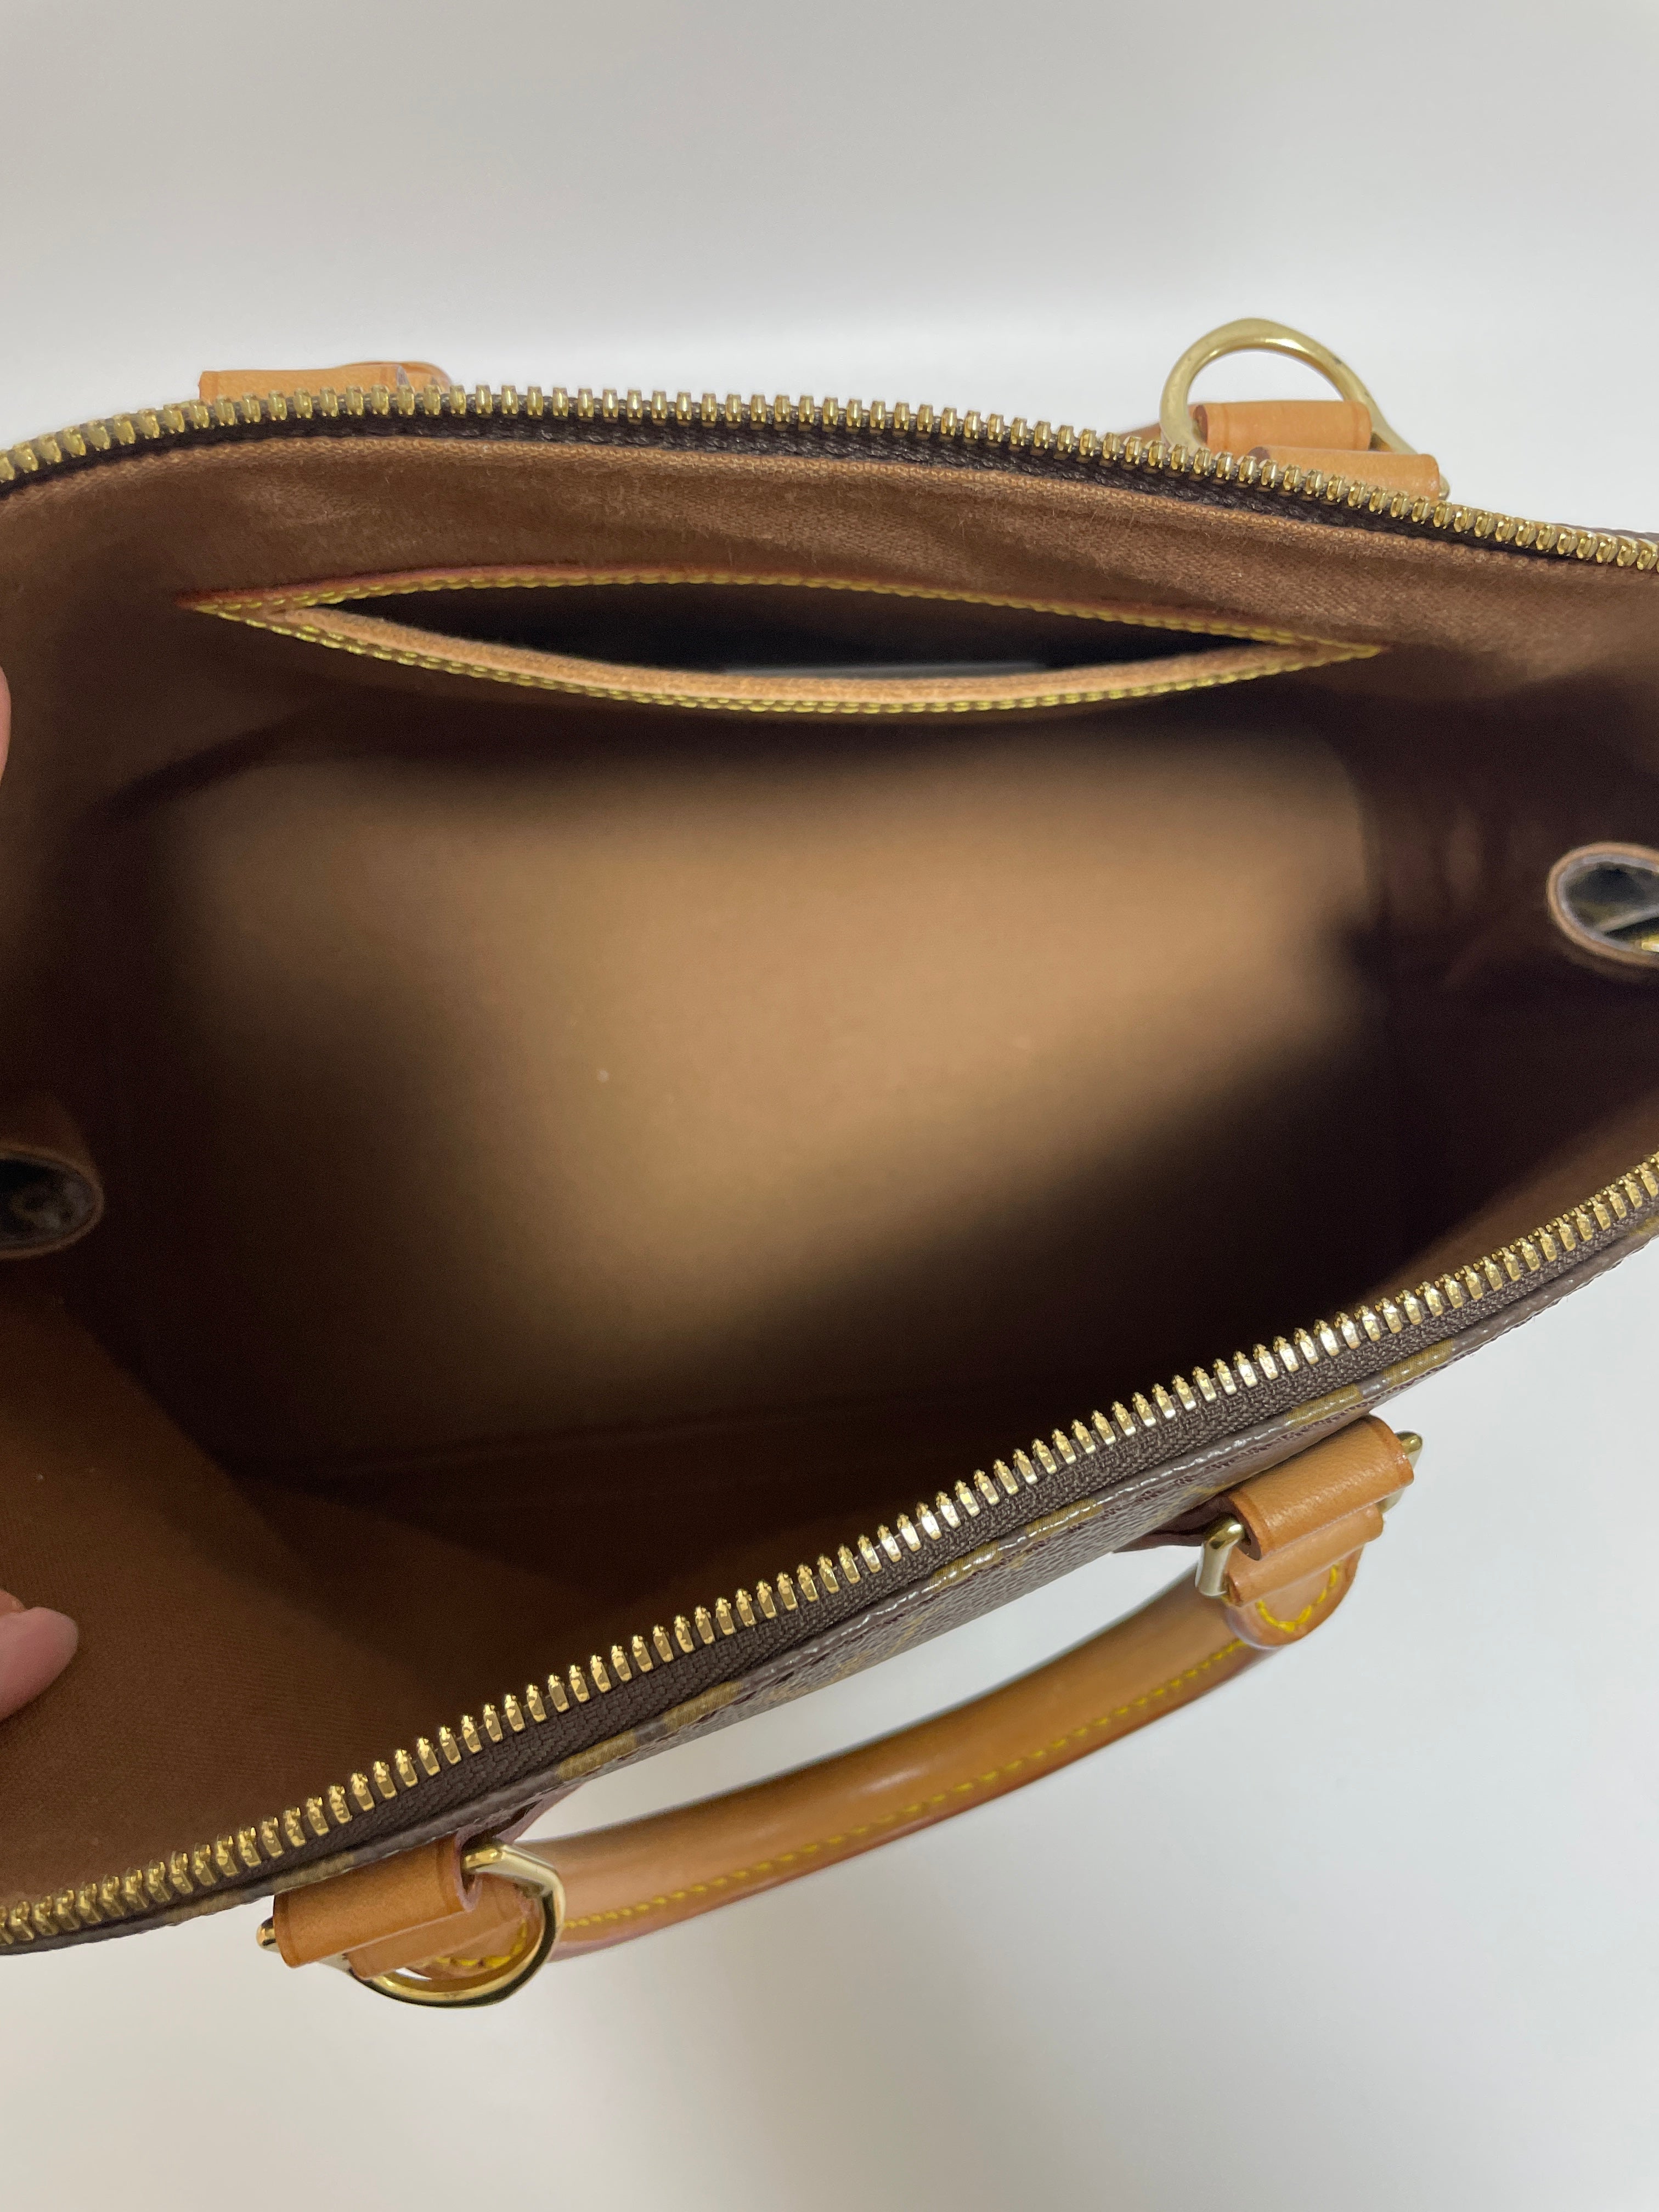 Louis Vuitton Alma PM Handbag Used (7537)